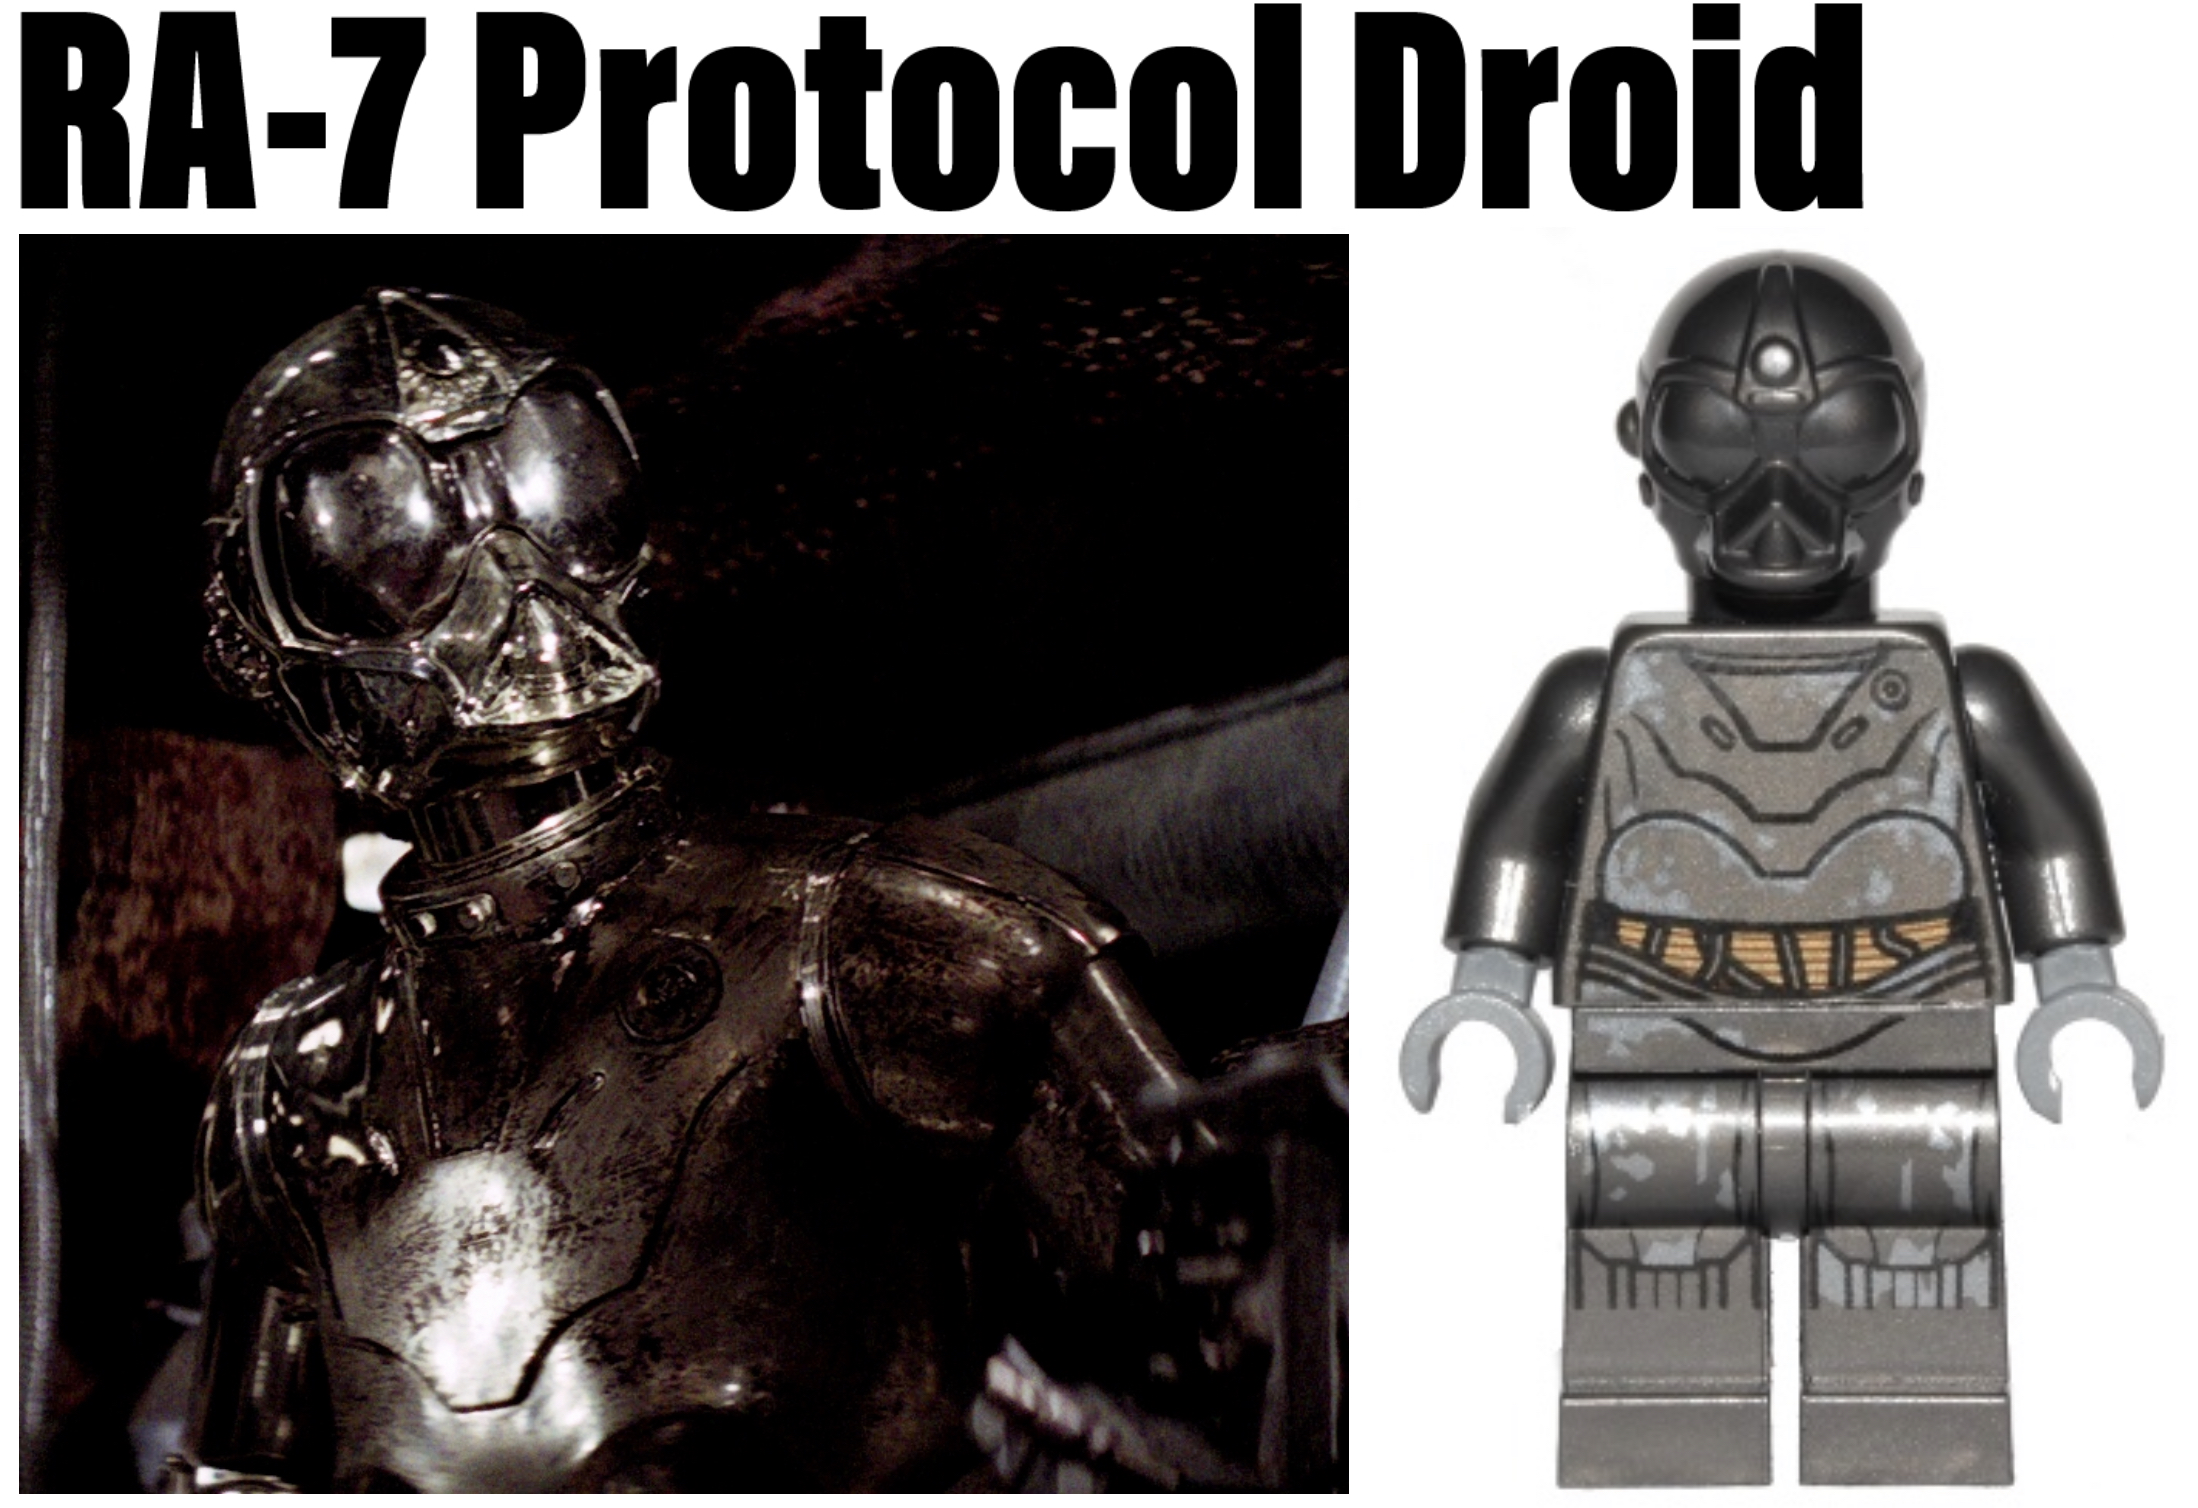 recreate sandcrawler lego droids ra-7 protocol droid